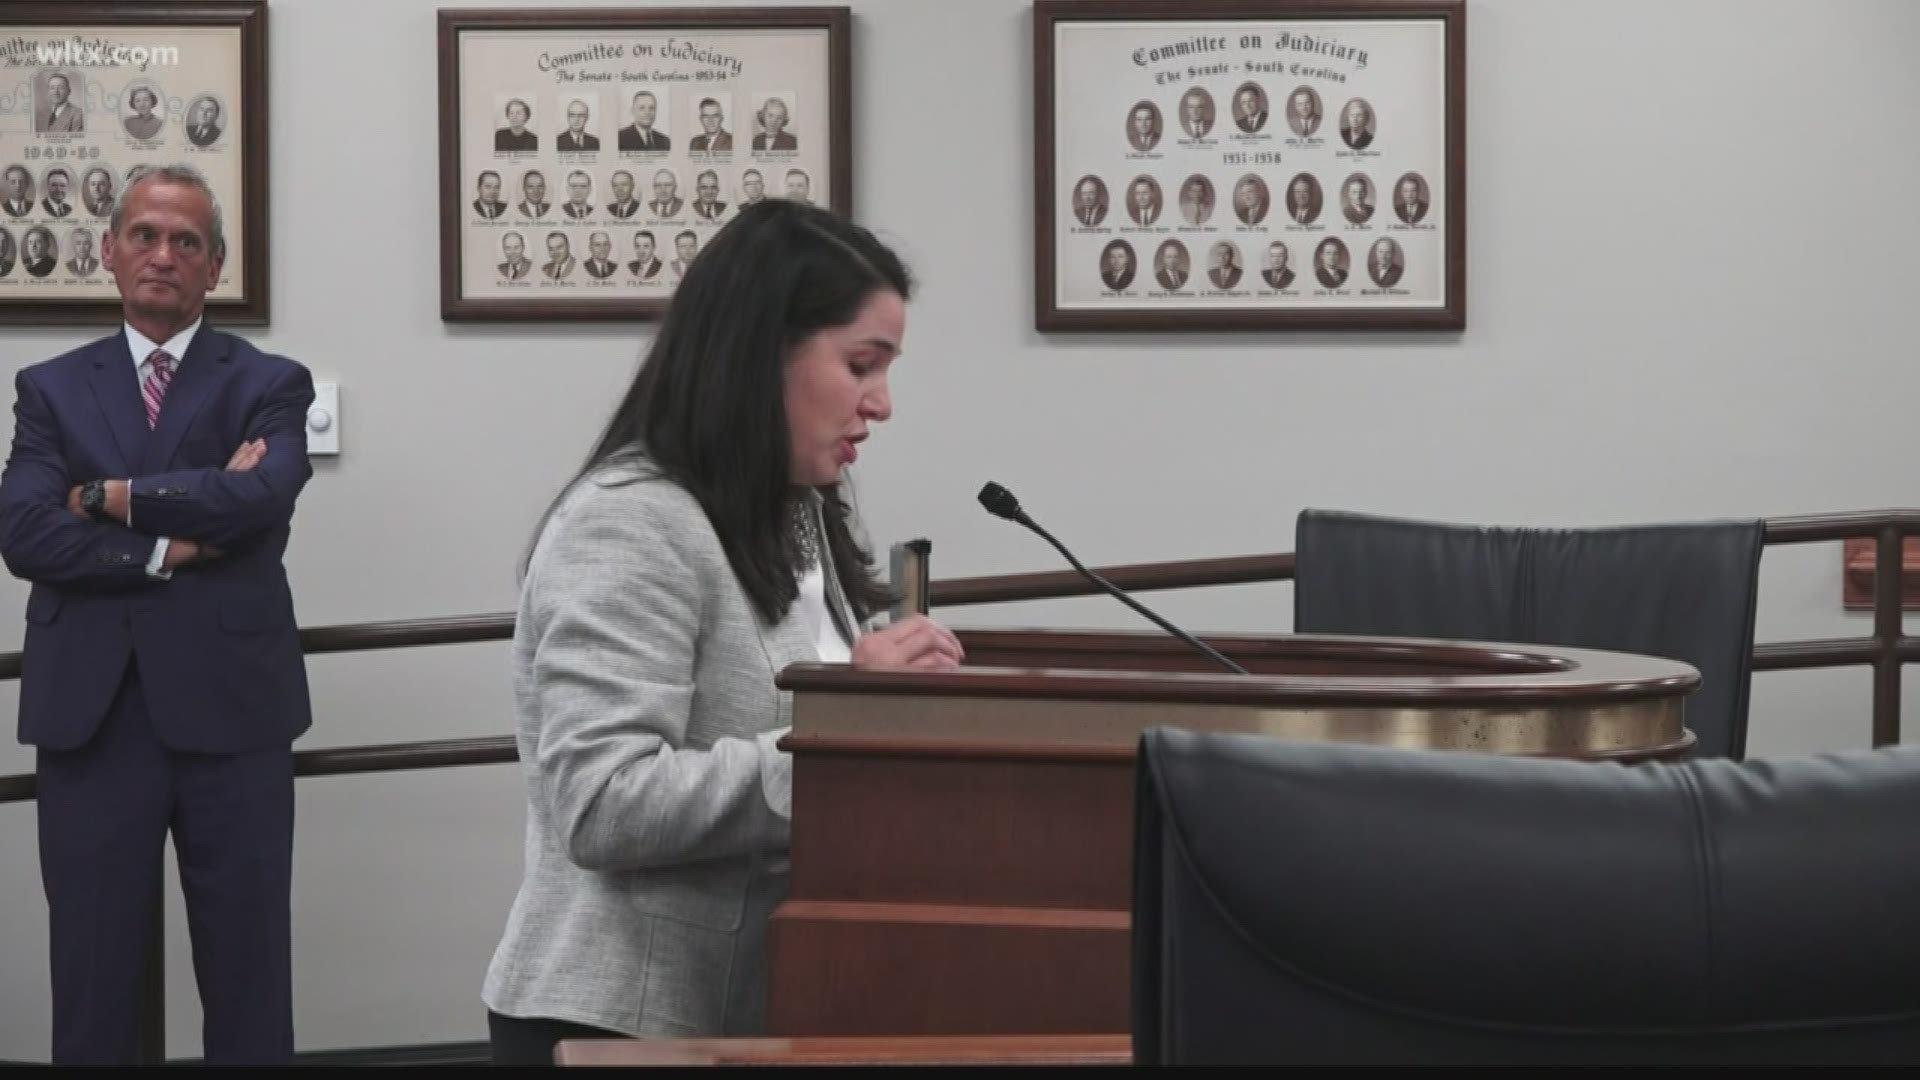 State senators listened to public testimony on the Fetal heartbeat bill.